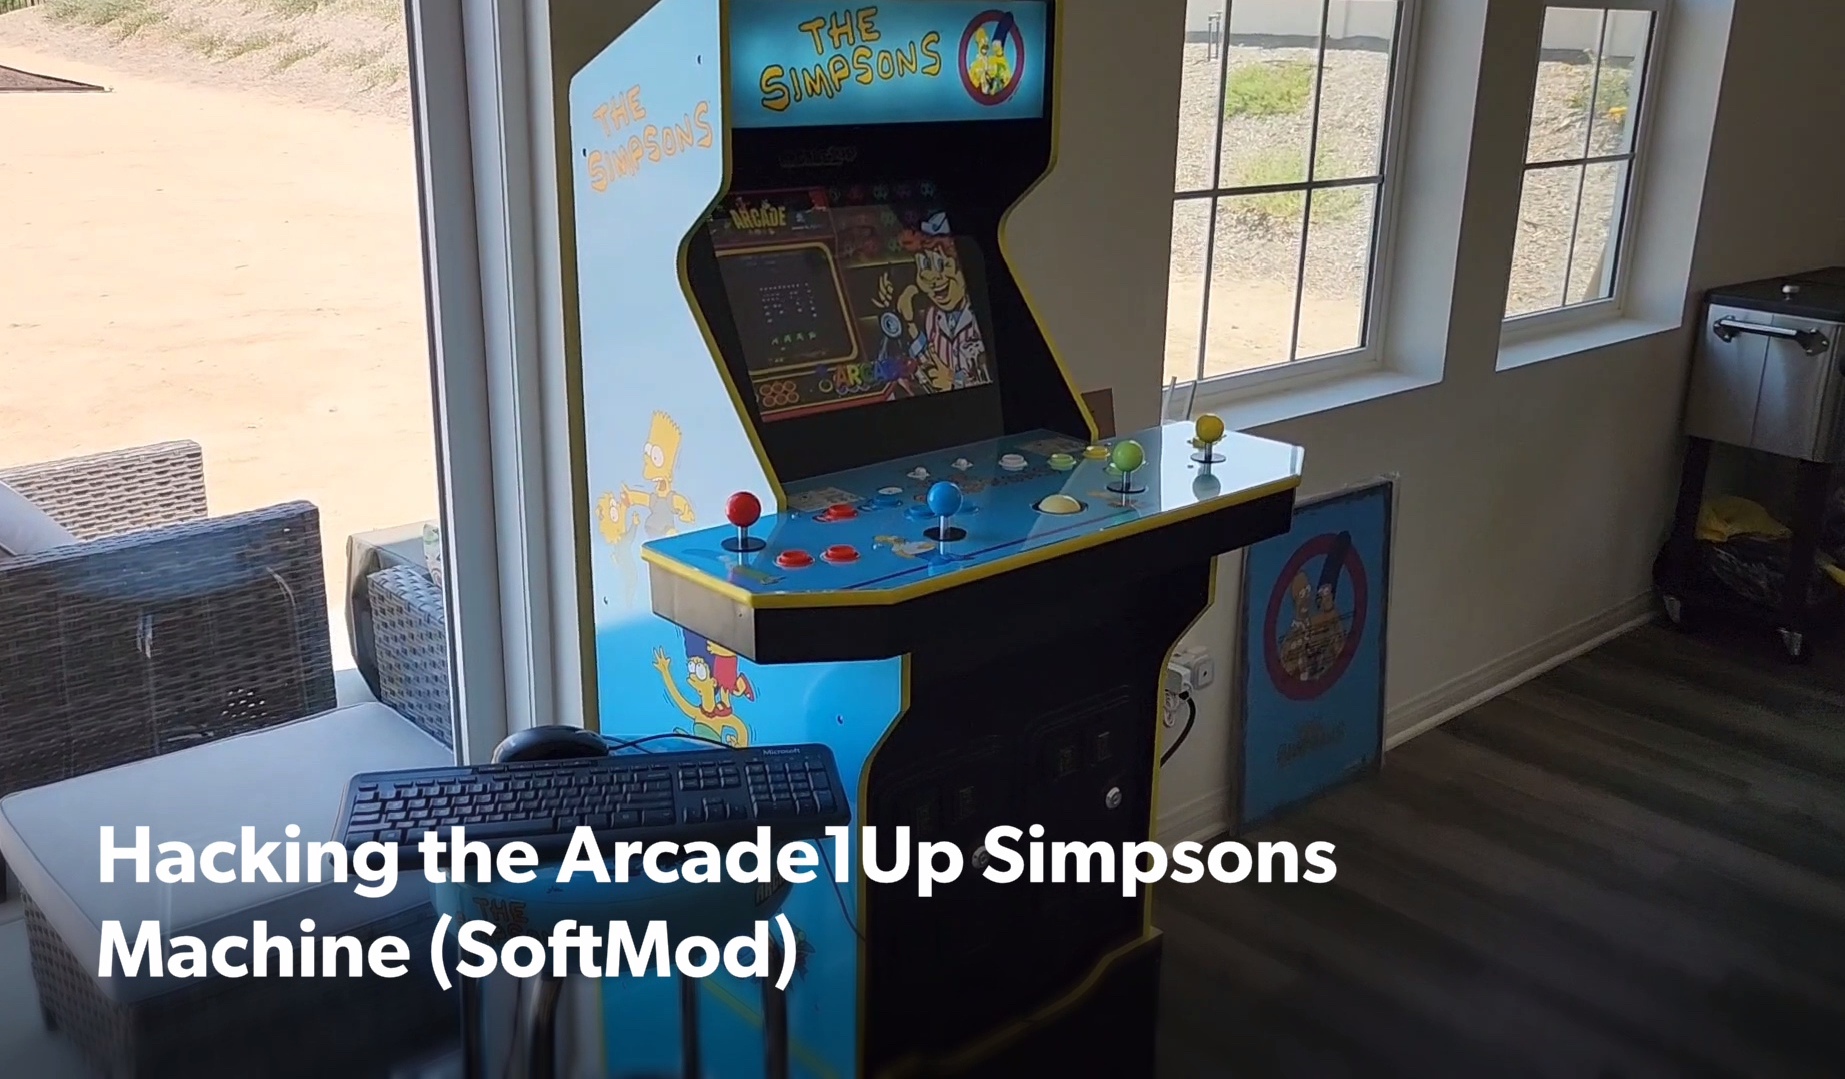 Arcade1up Simpsons Machine